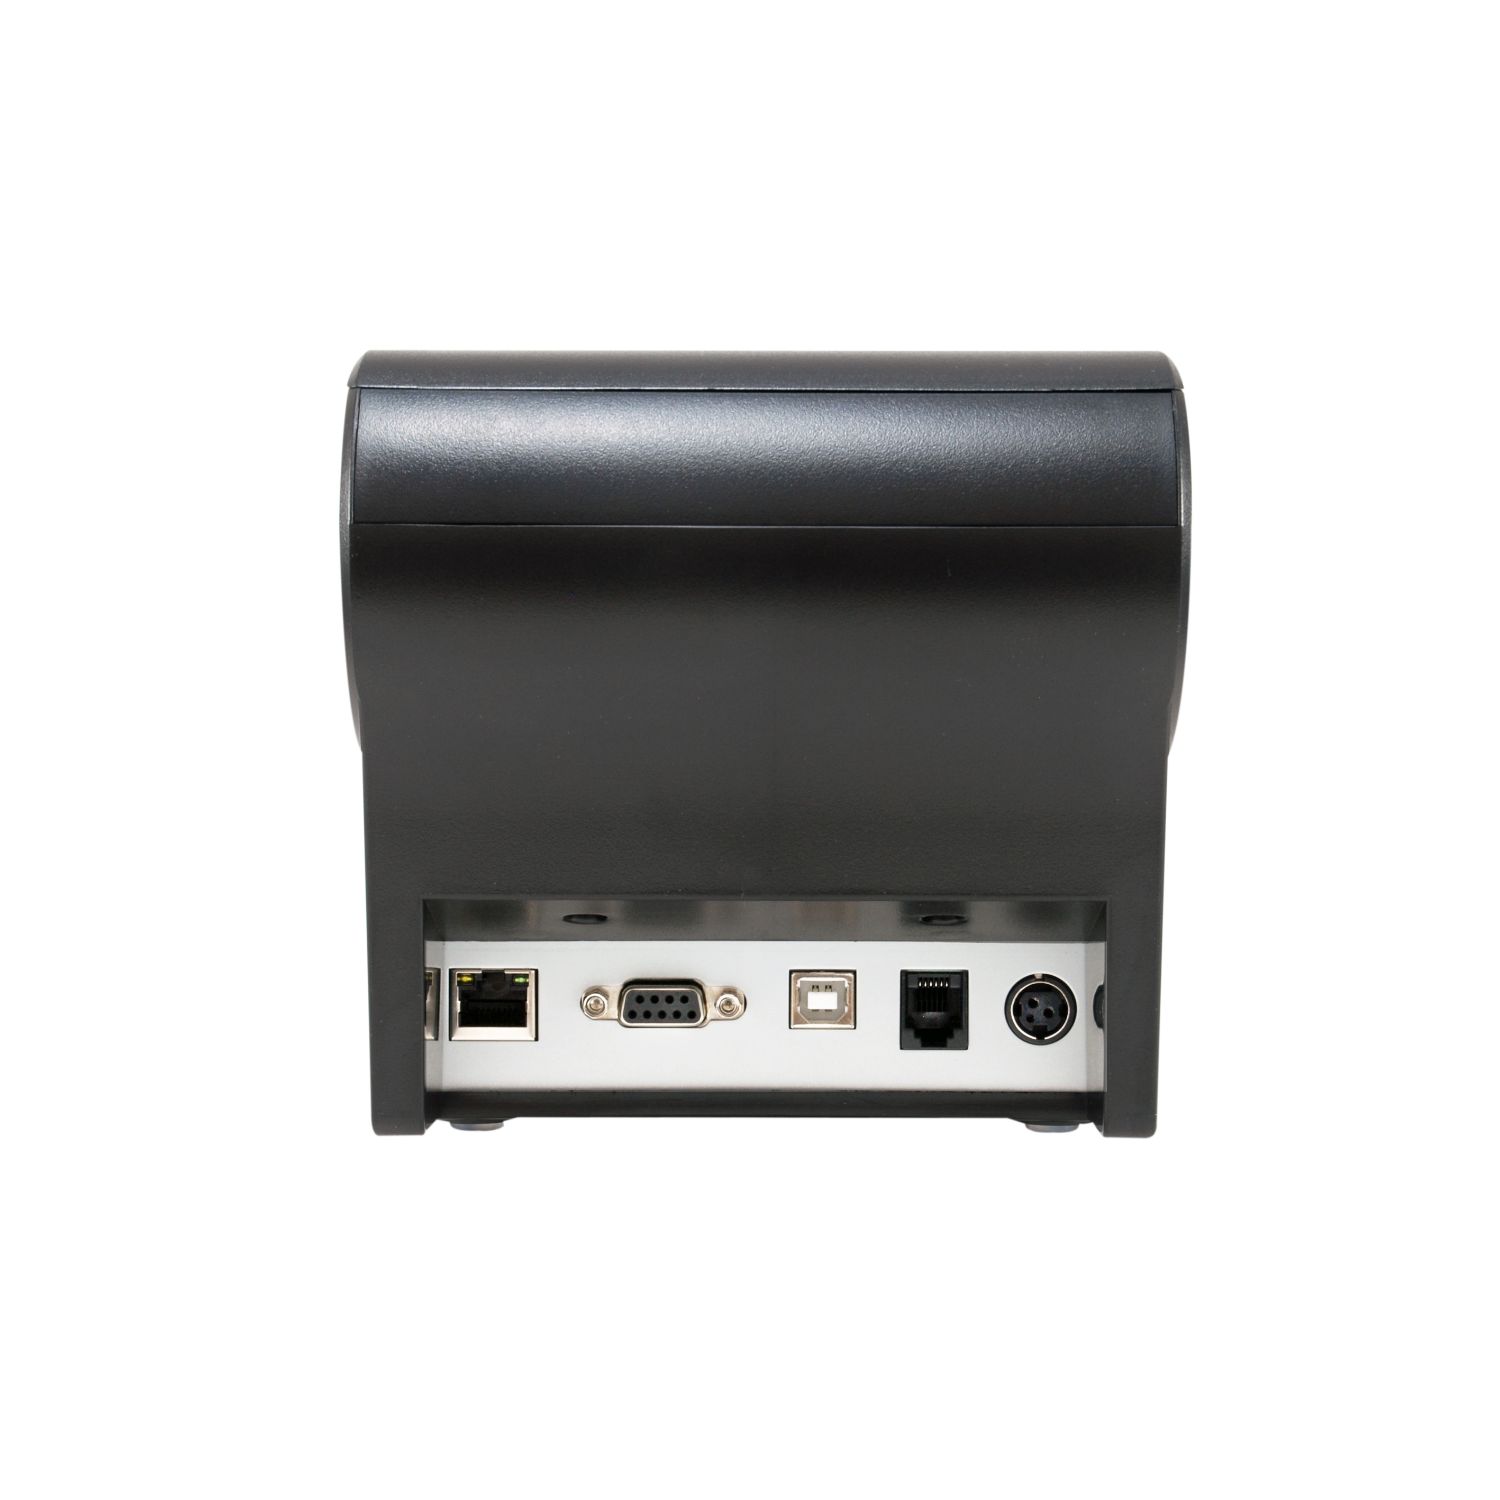 EQ351003 - Impresora Trmica EQUIP 80mm 203x203dpi USB-B 2.0 RS232 RJ11 Corte Manual/Automtico Negra (EQ351003)